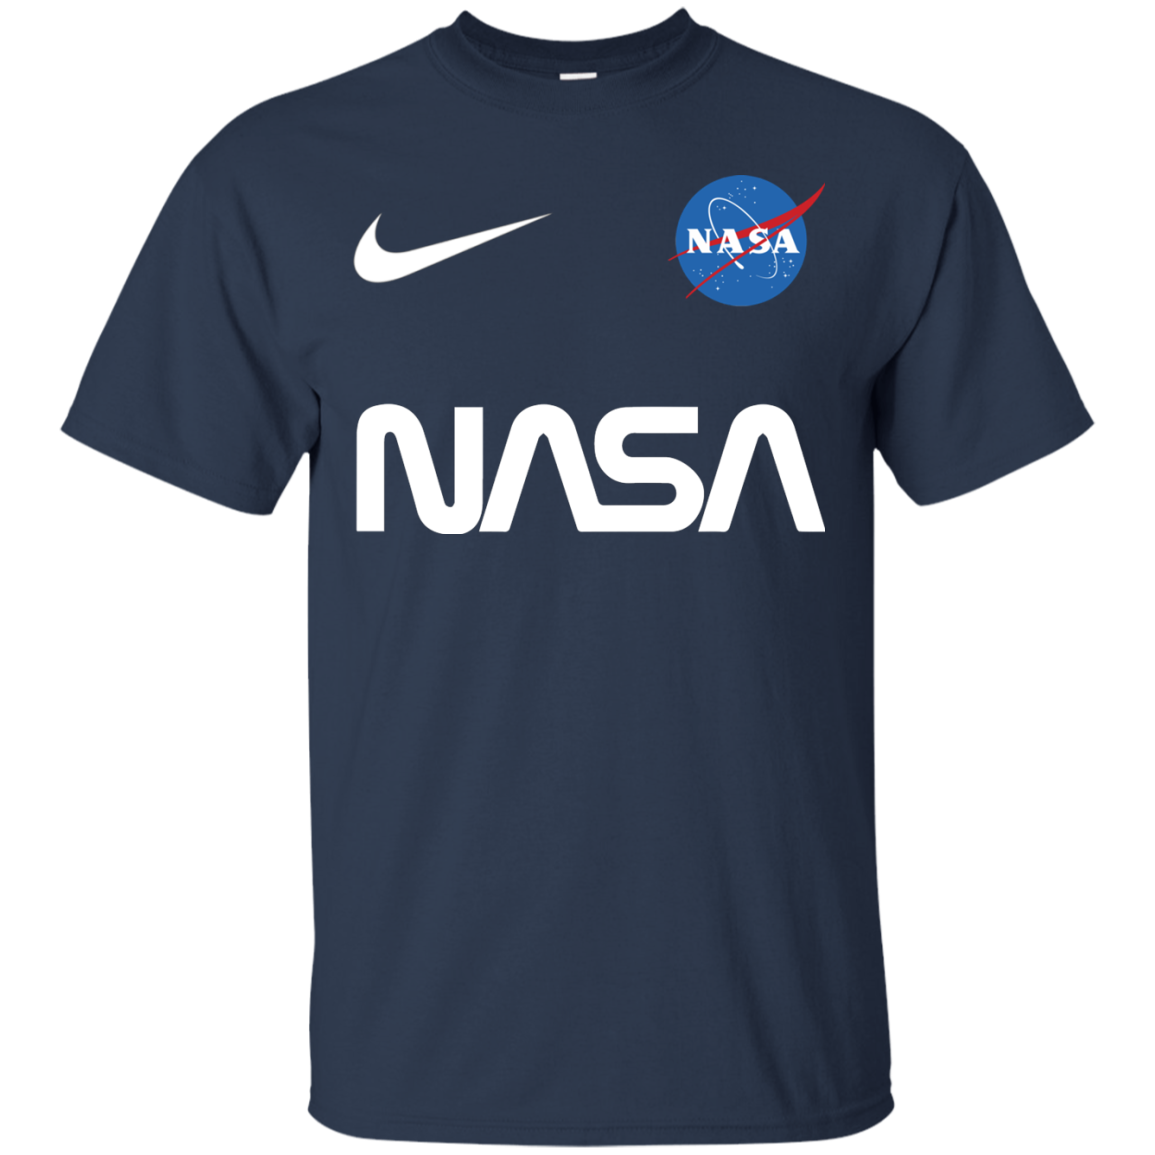 Nasa Astronaut logo Nike funny t shirt 